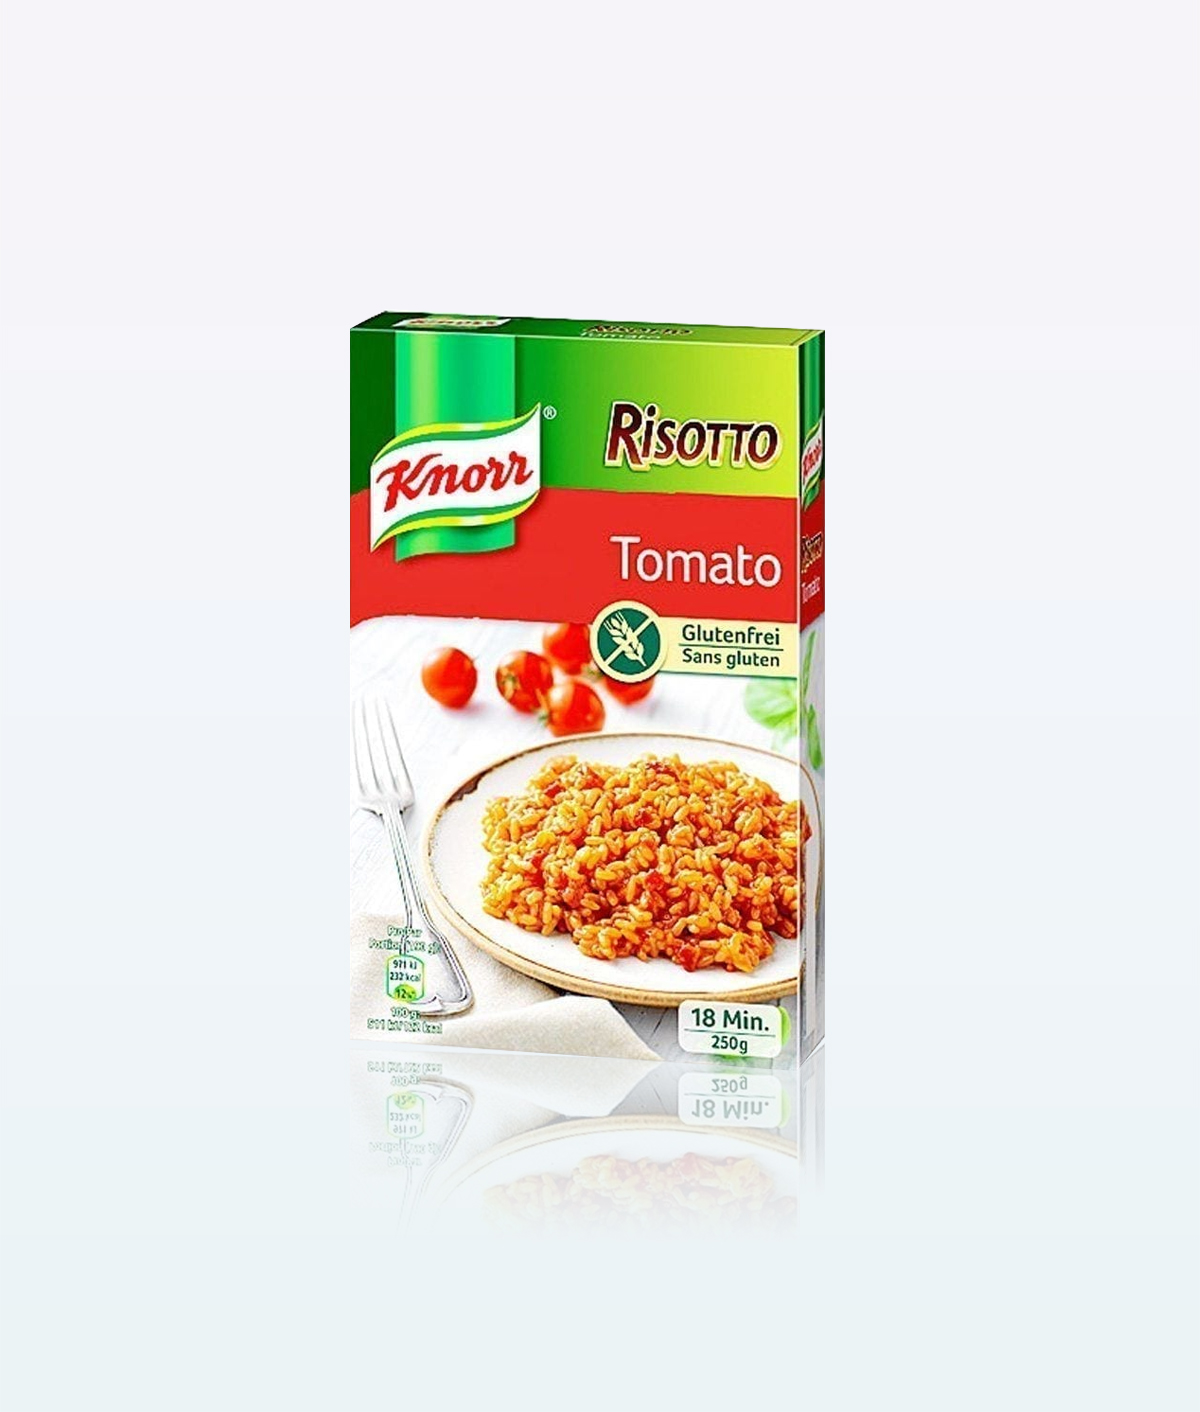 Knorr Risotto Tomato 250g